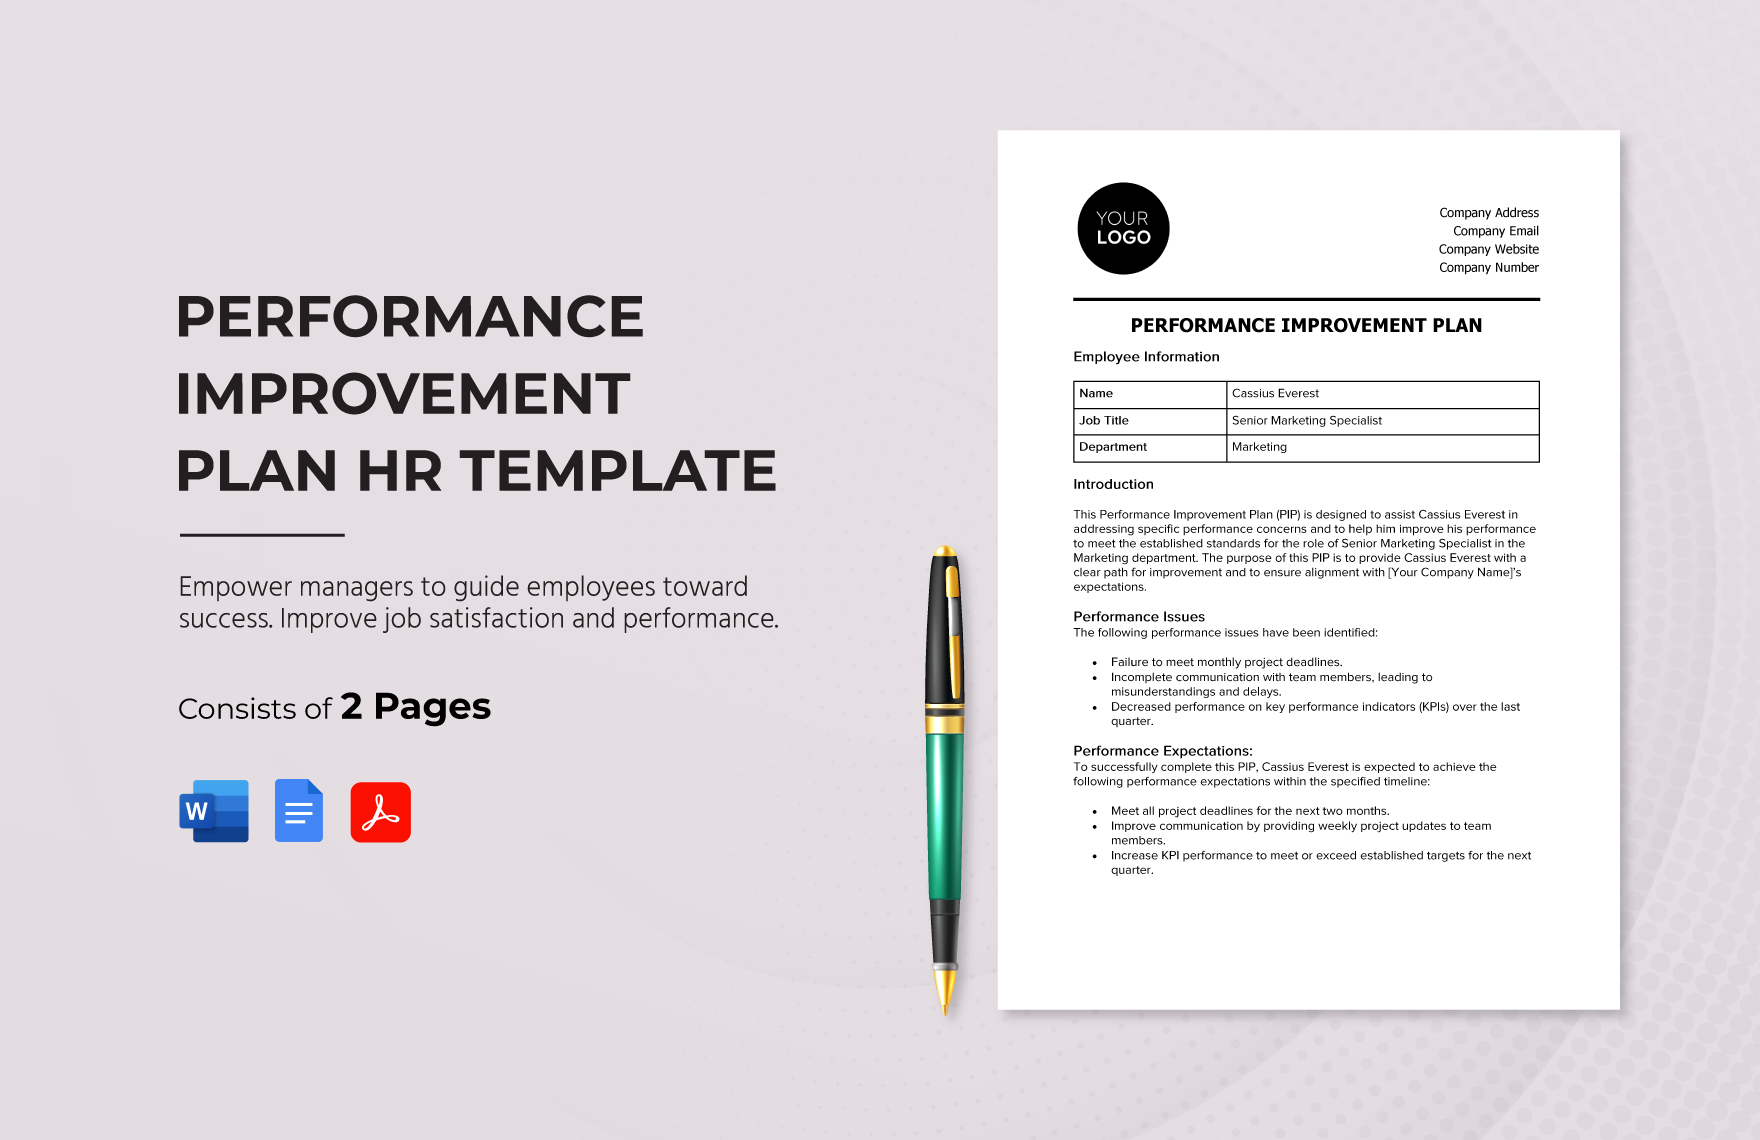 Performance Improvement Plan HR Template